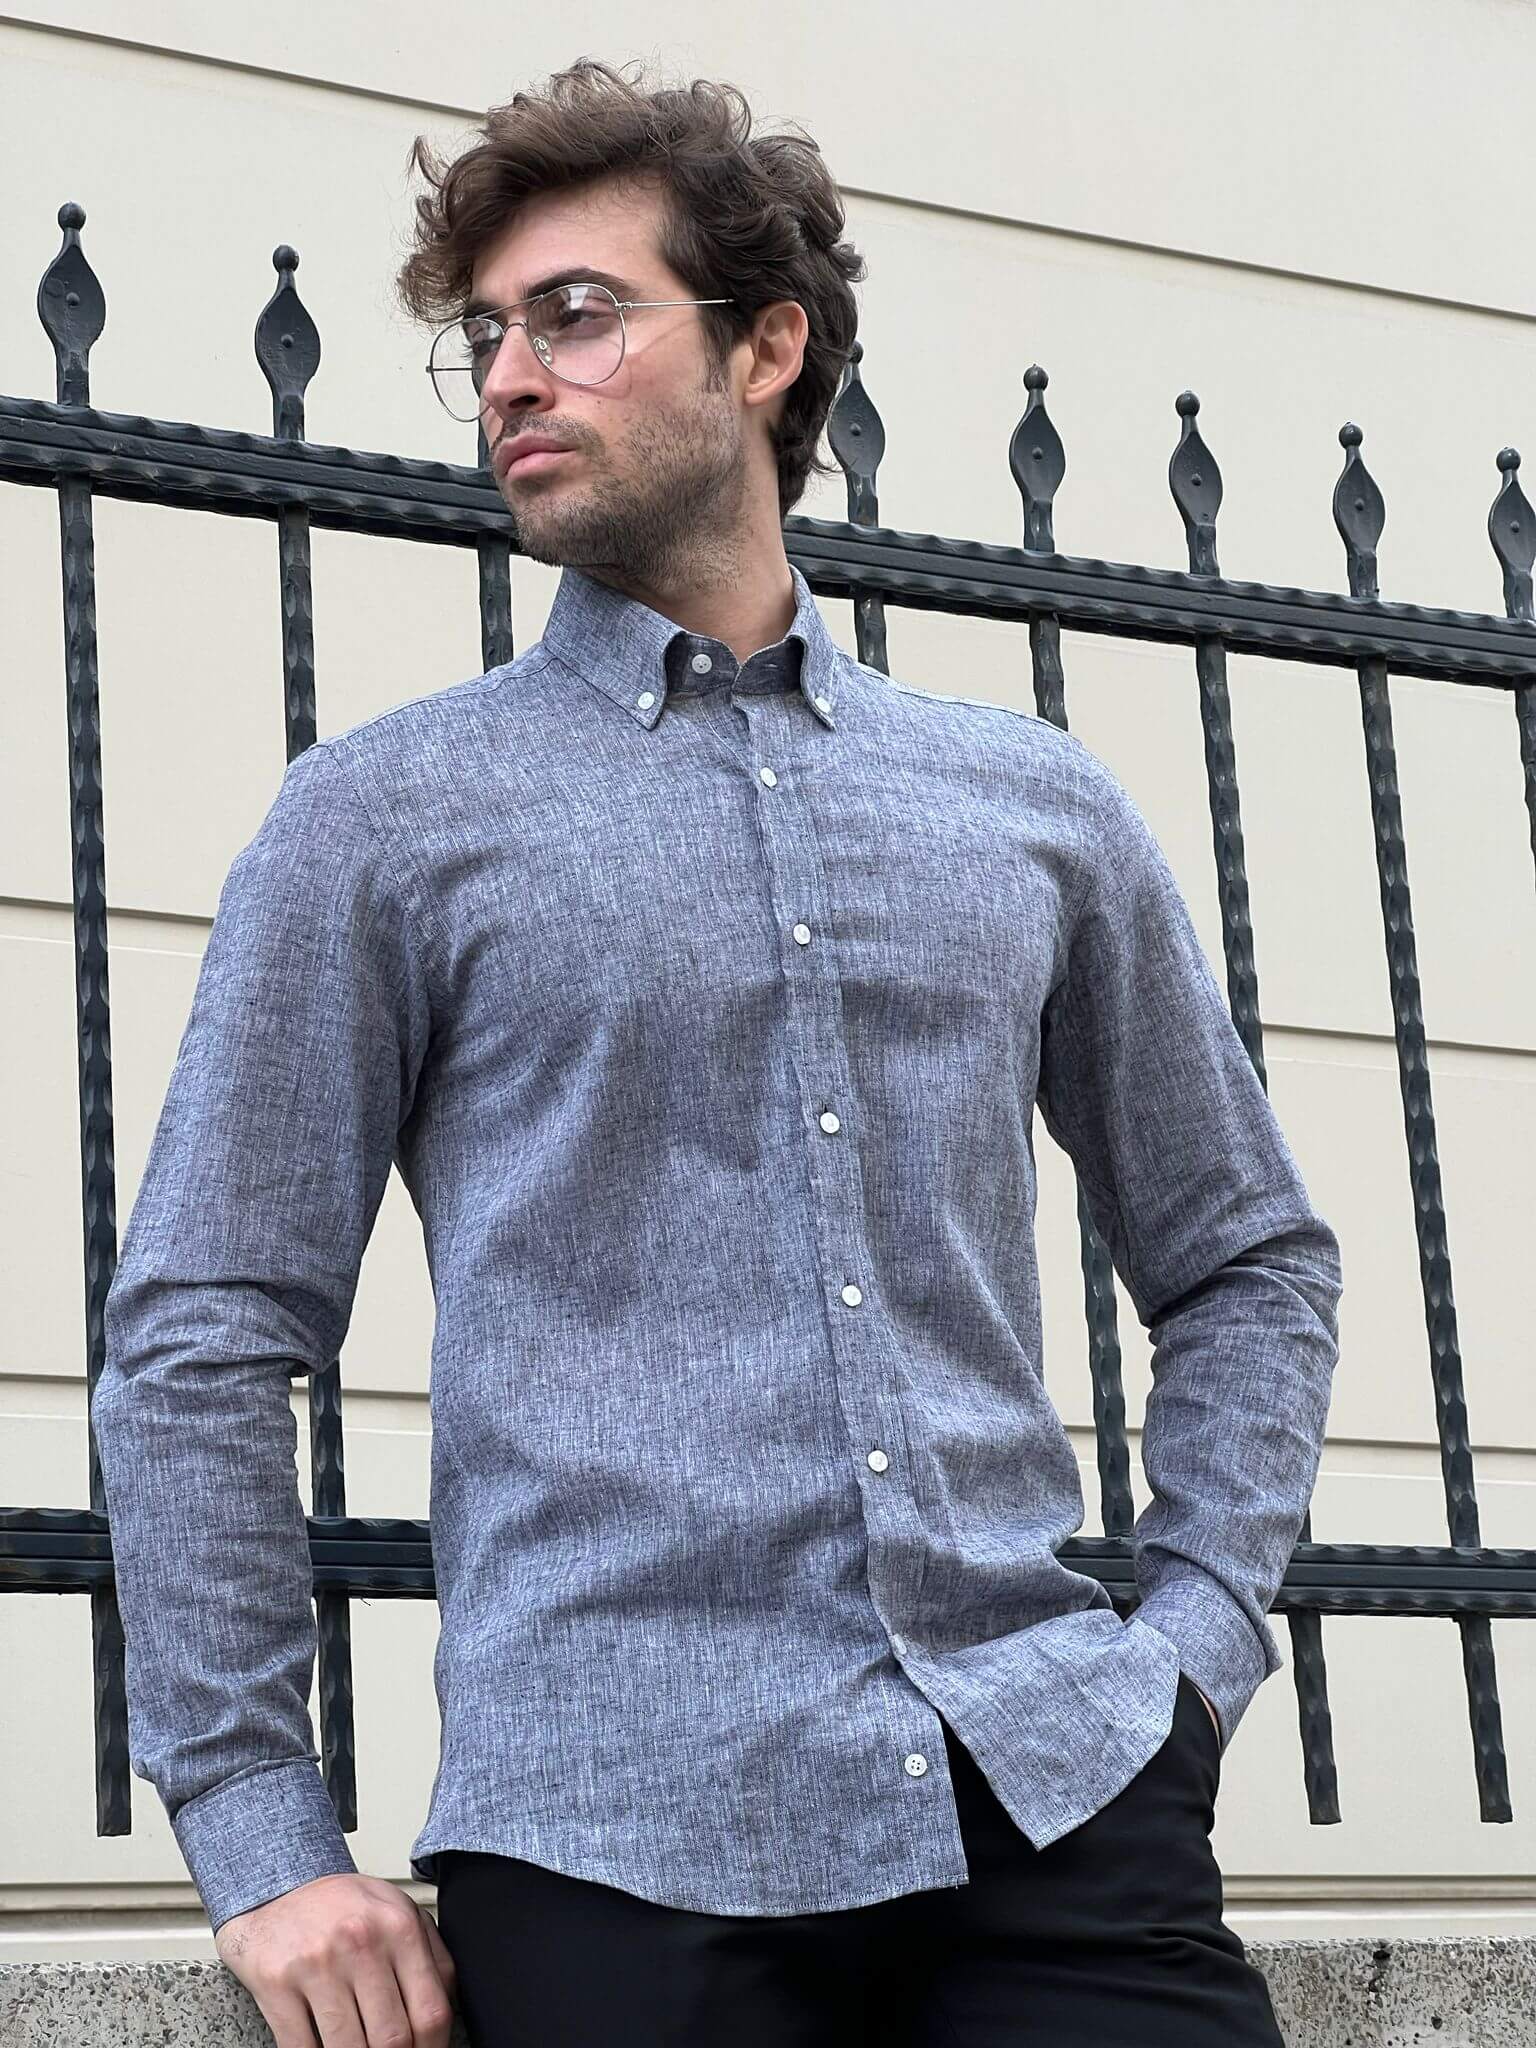 Elegance meets comfort: Our male model effortlessly rocks the Gray Cotton Shirt